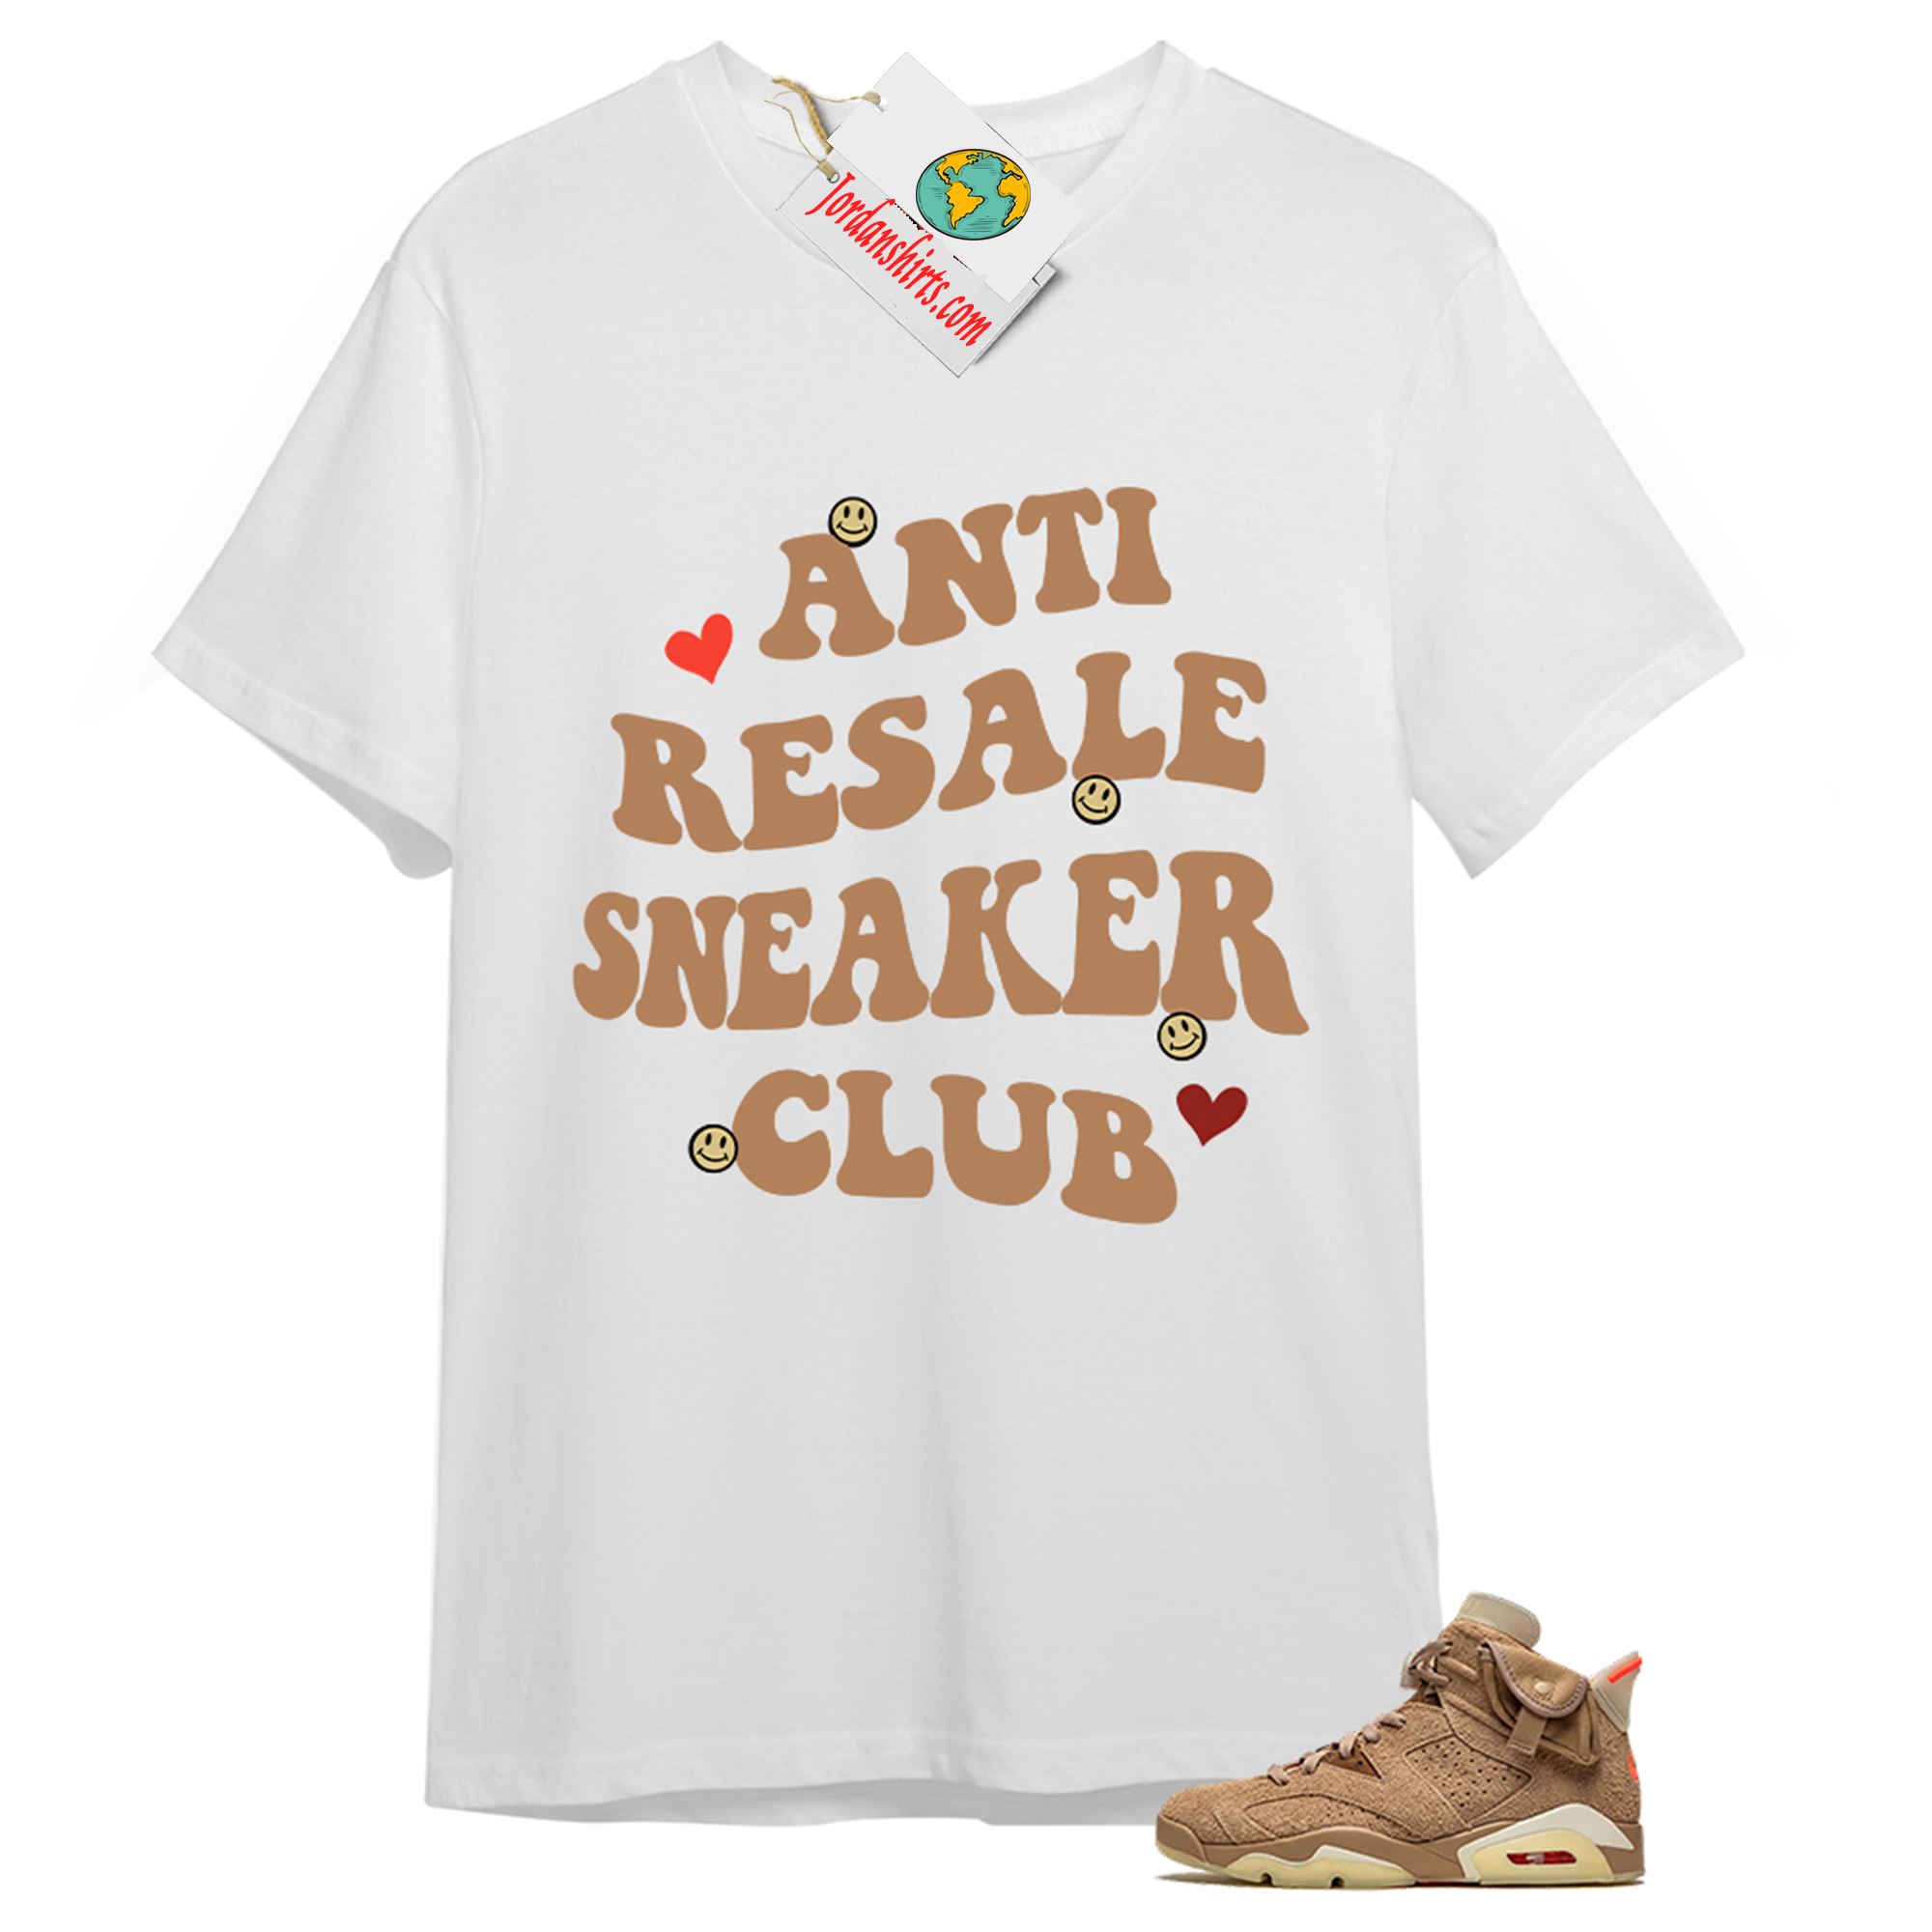 Jordan 6 Shirt, Anti Resale Sneaker Club White T-shirt Air Jordan 6 Travis Scott 6s Size Up To 5xl